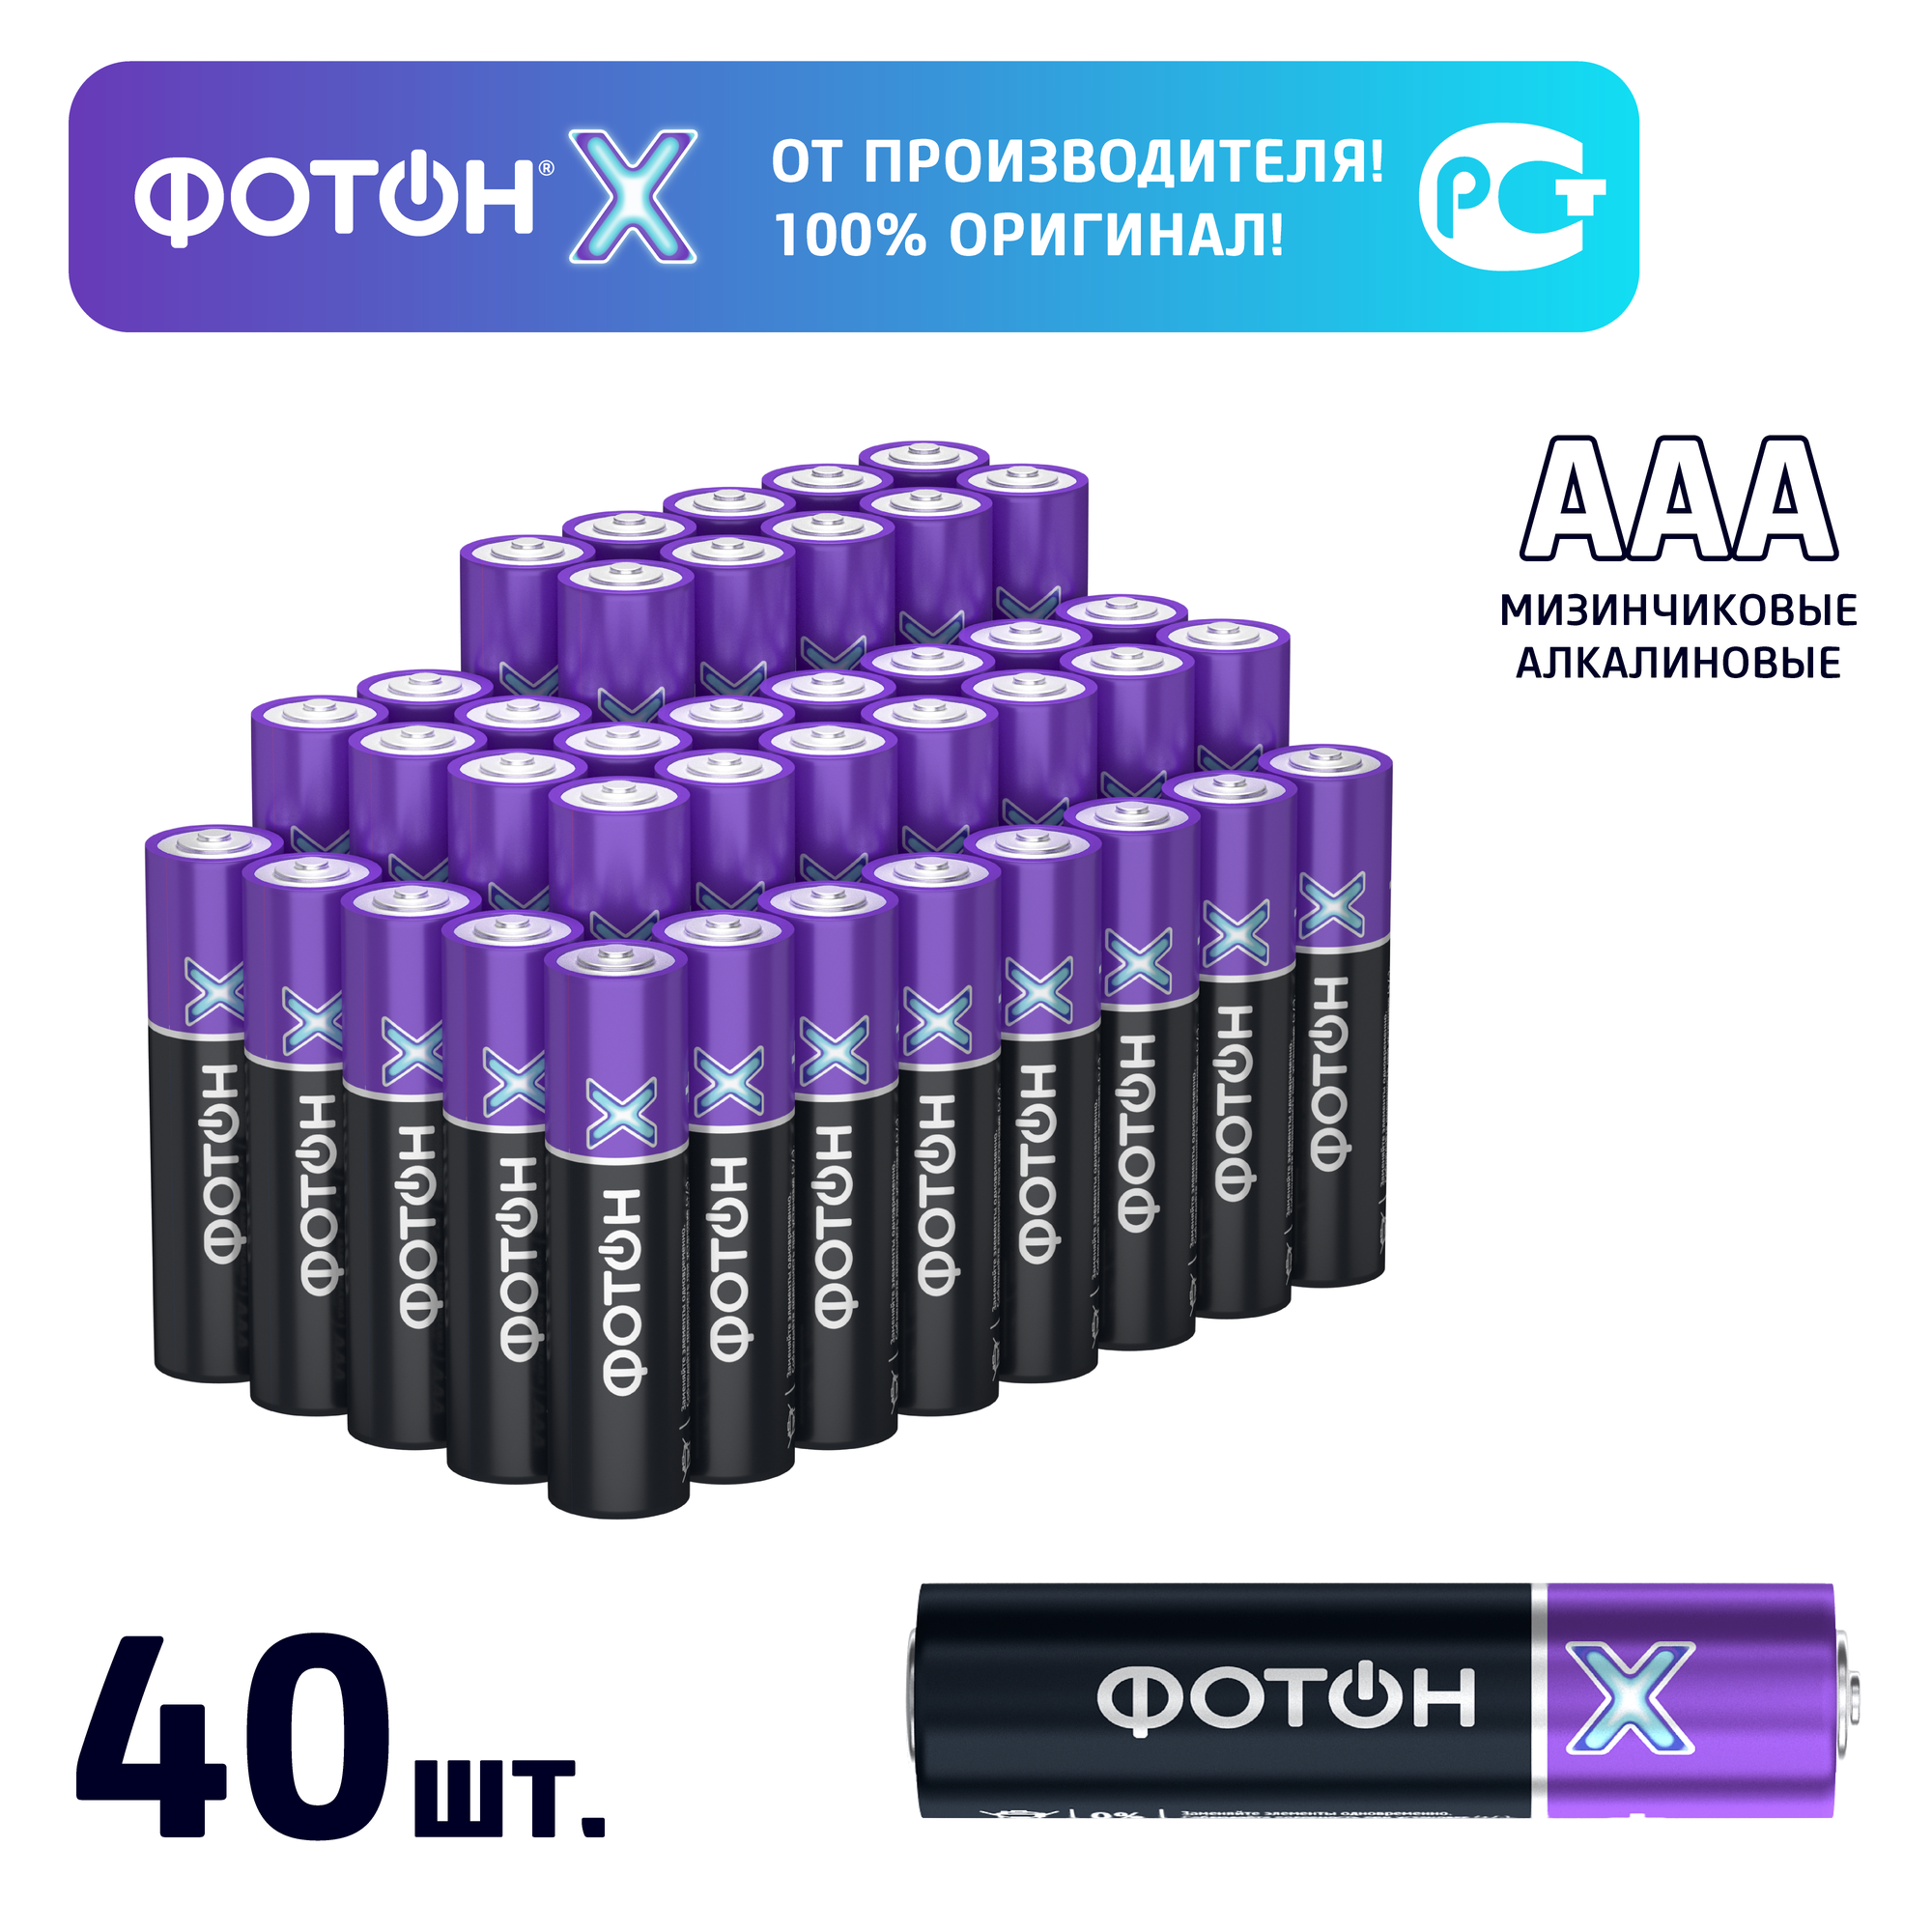 Упаковка батареек фотон - Х ААА / LR03 (мизинчиковые), 40 шт.